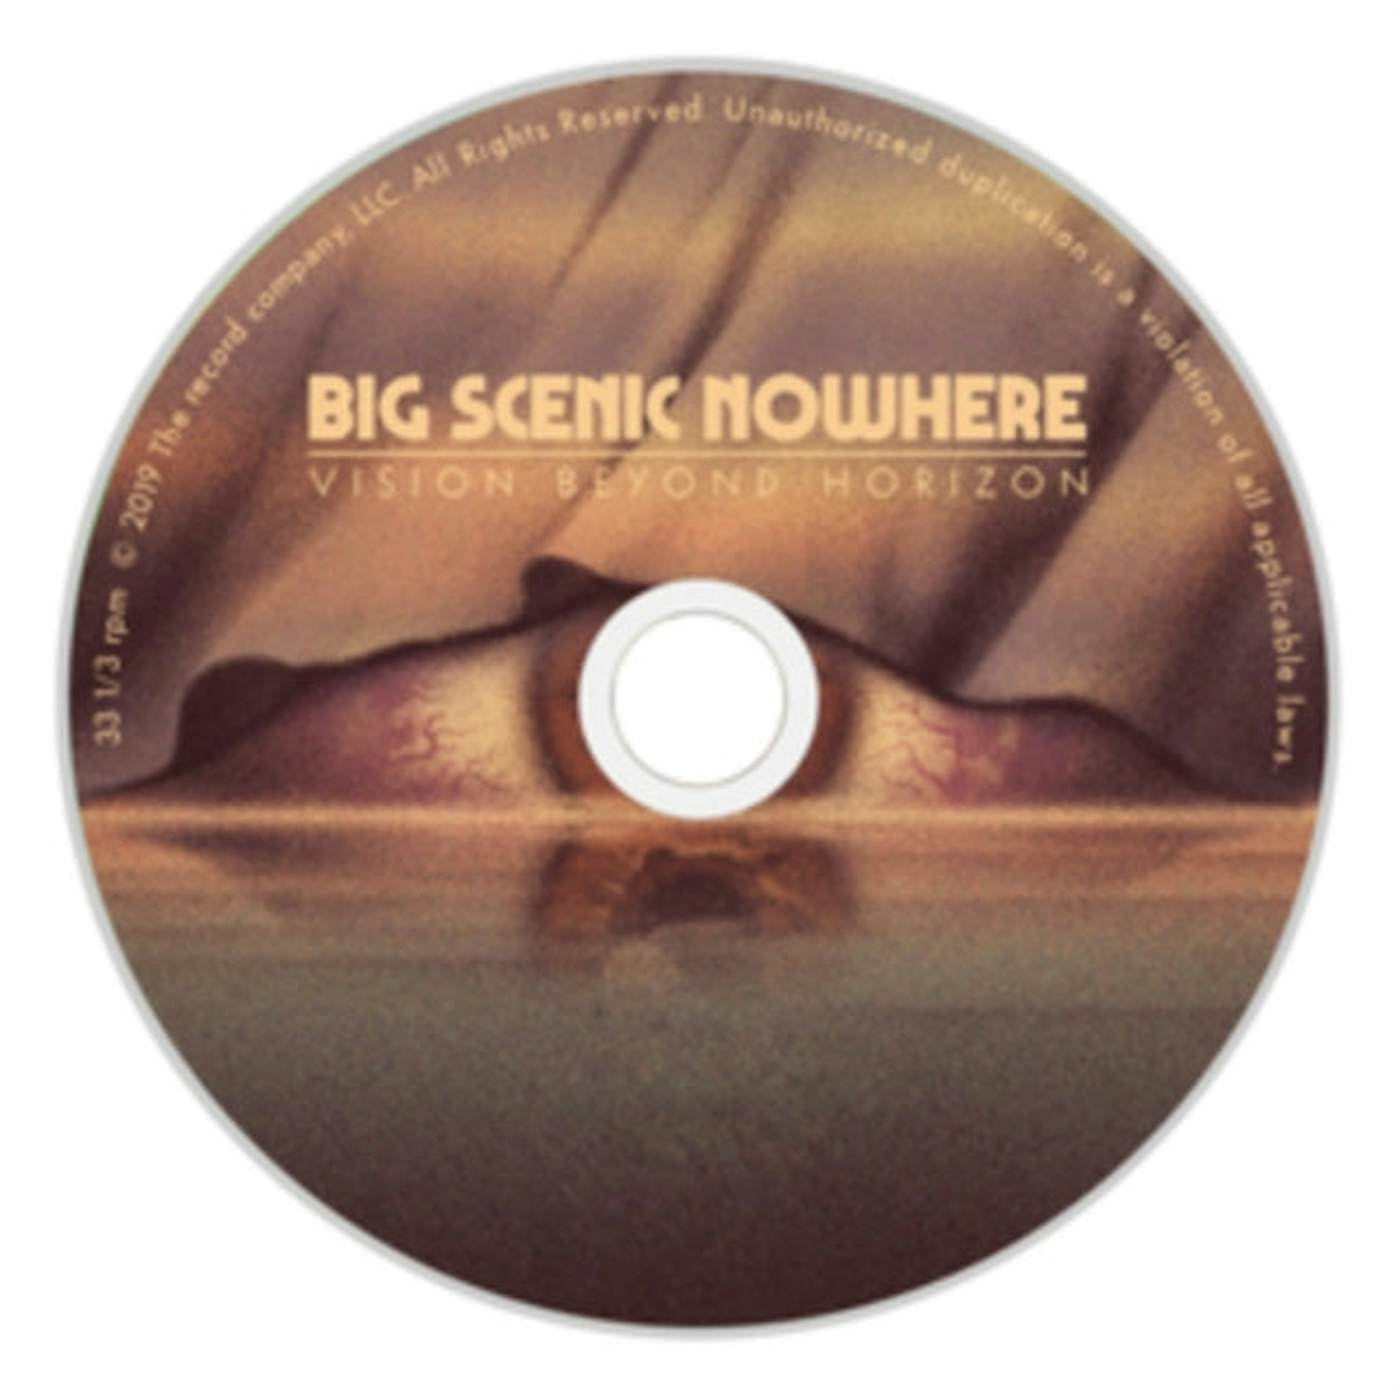 Big Scenic Nowhere CD - Vision Beyond Horizon